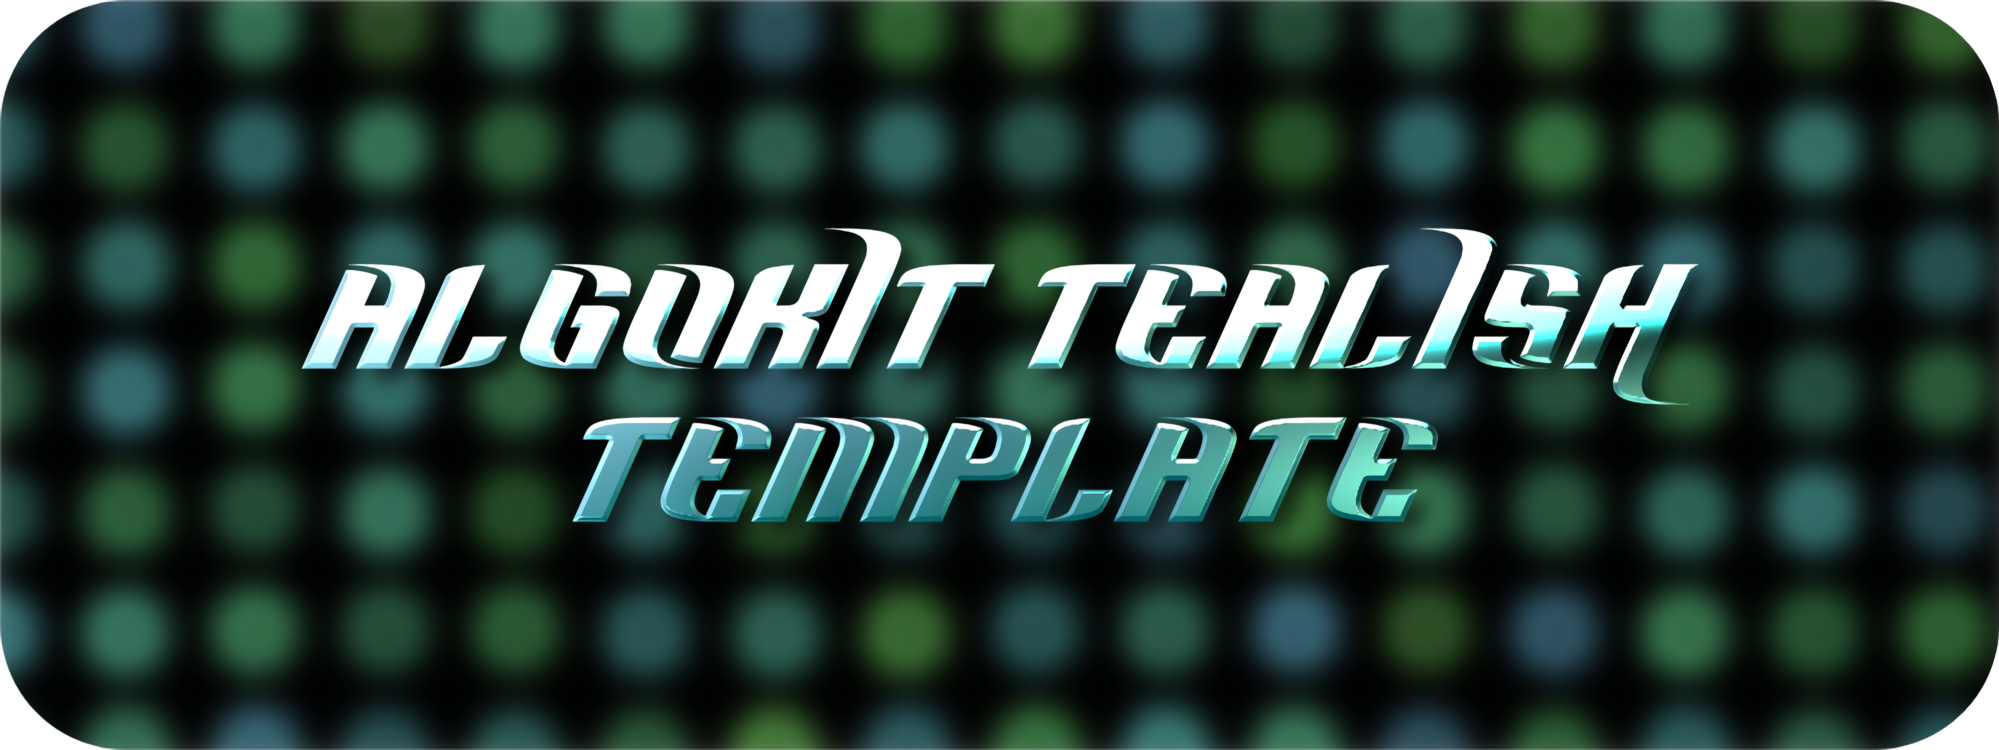 algokit-tealish-template